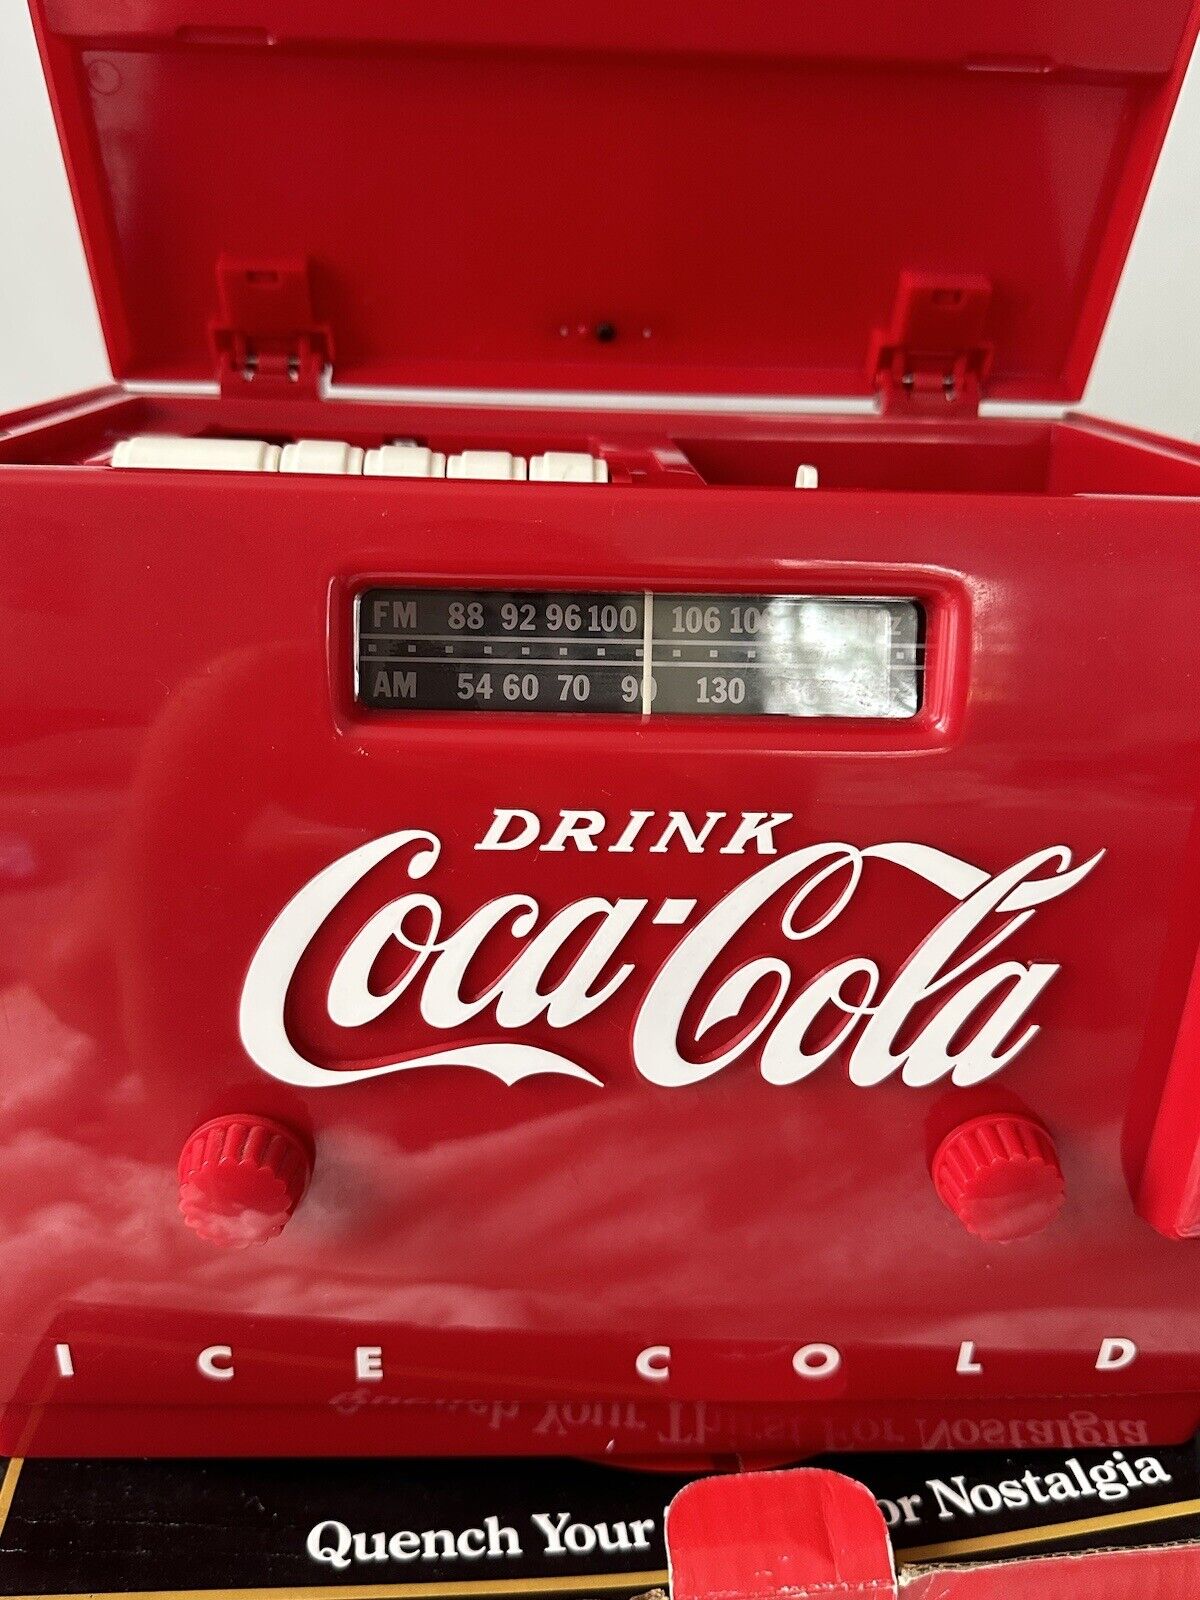 Vintage Looking Coke Drink Coca-Cola Cooler AM FM Radio Cassette Player